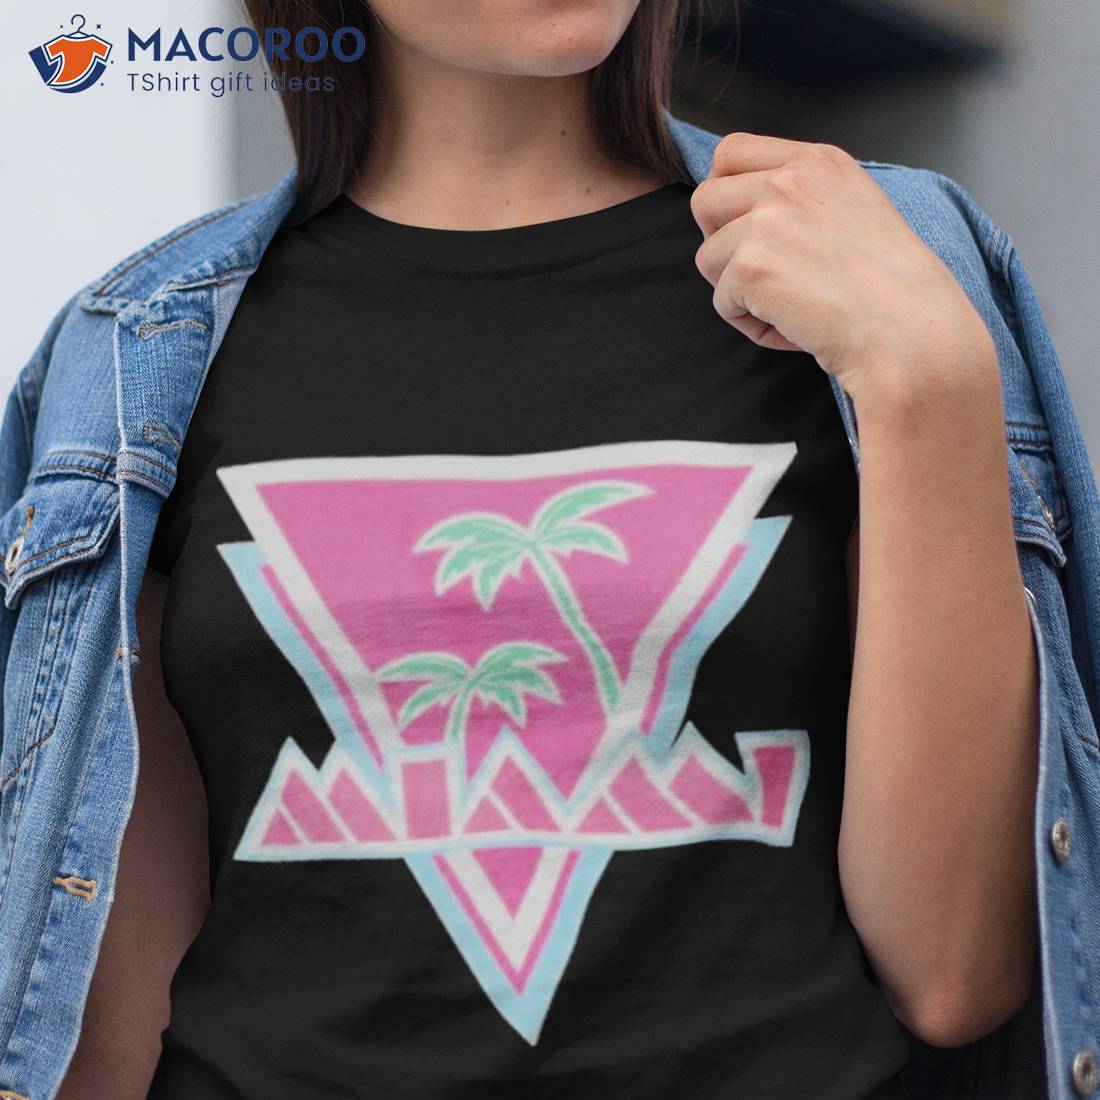 2023 Miami GP T-shirt - F1 Collection